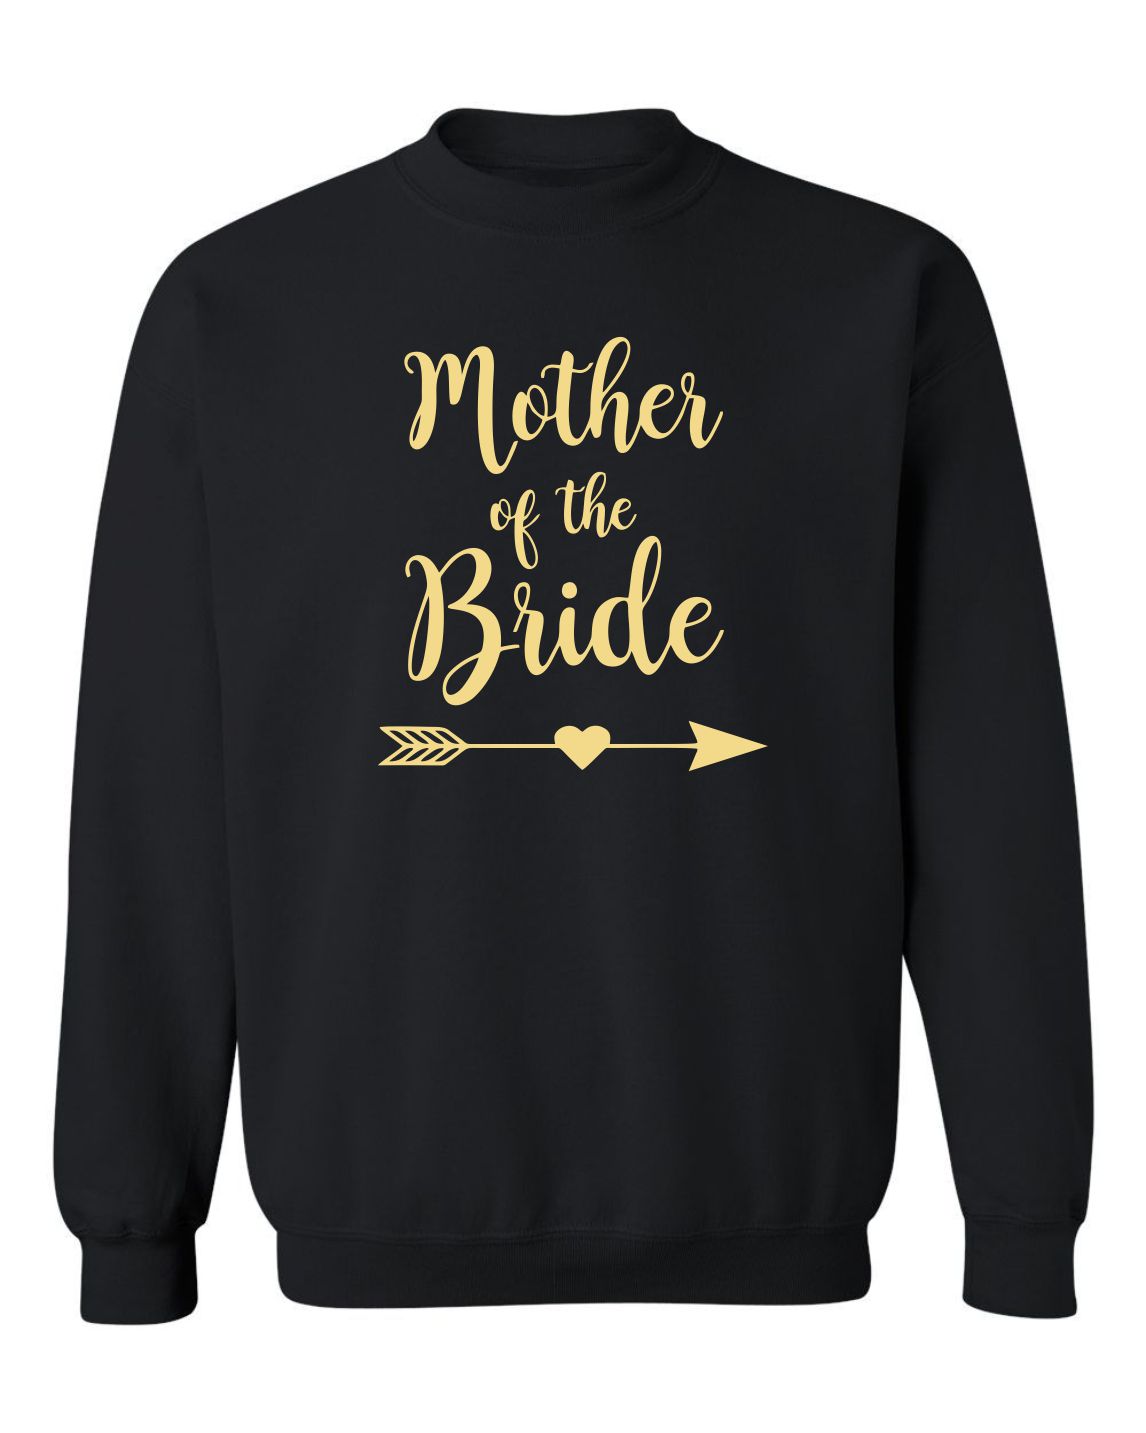 "Mother Of The Bride" (Arrow Heart Design) Unisex Crewneck